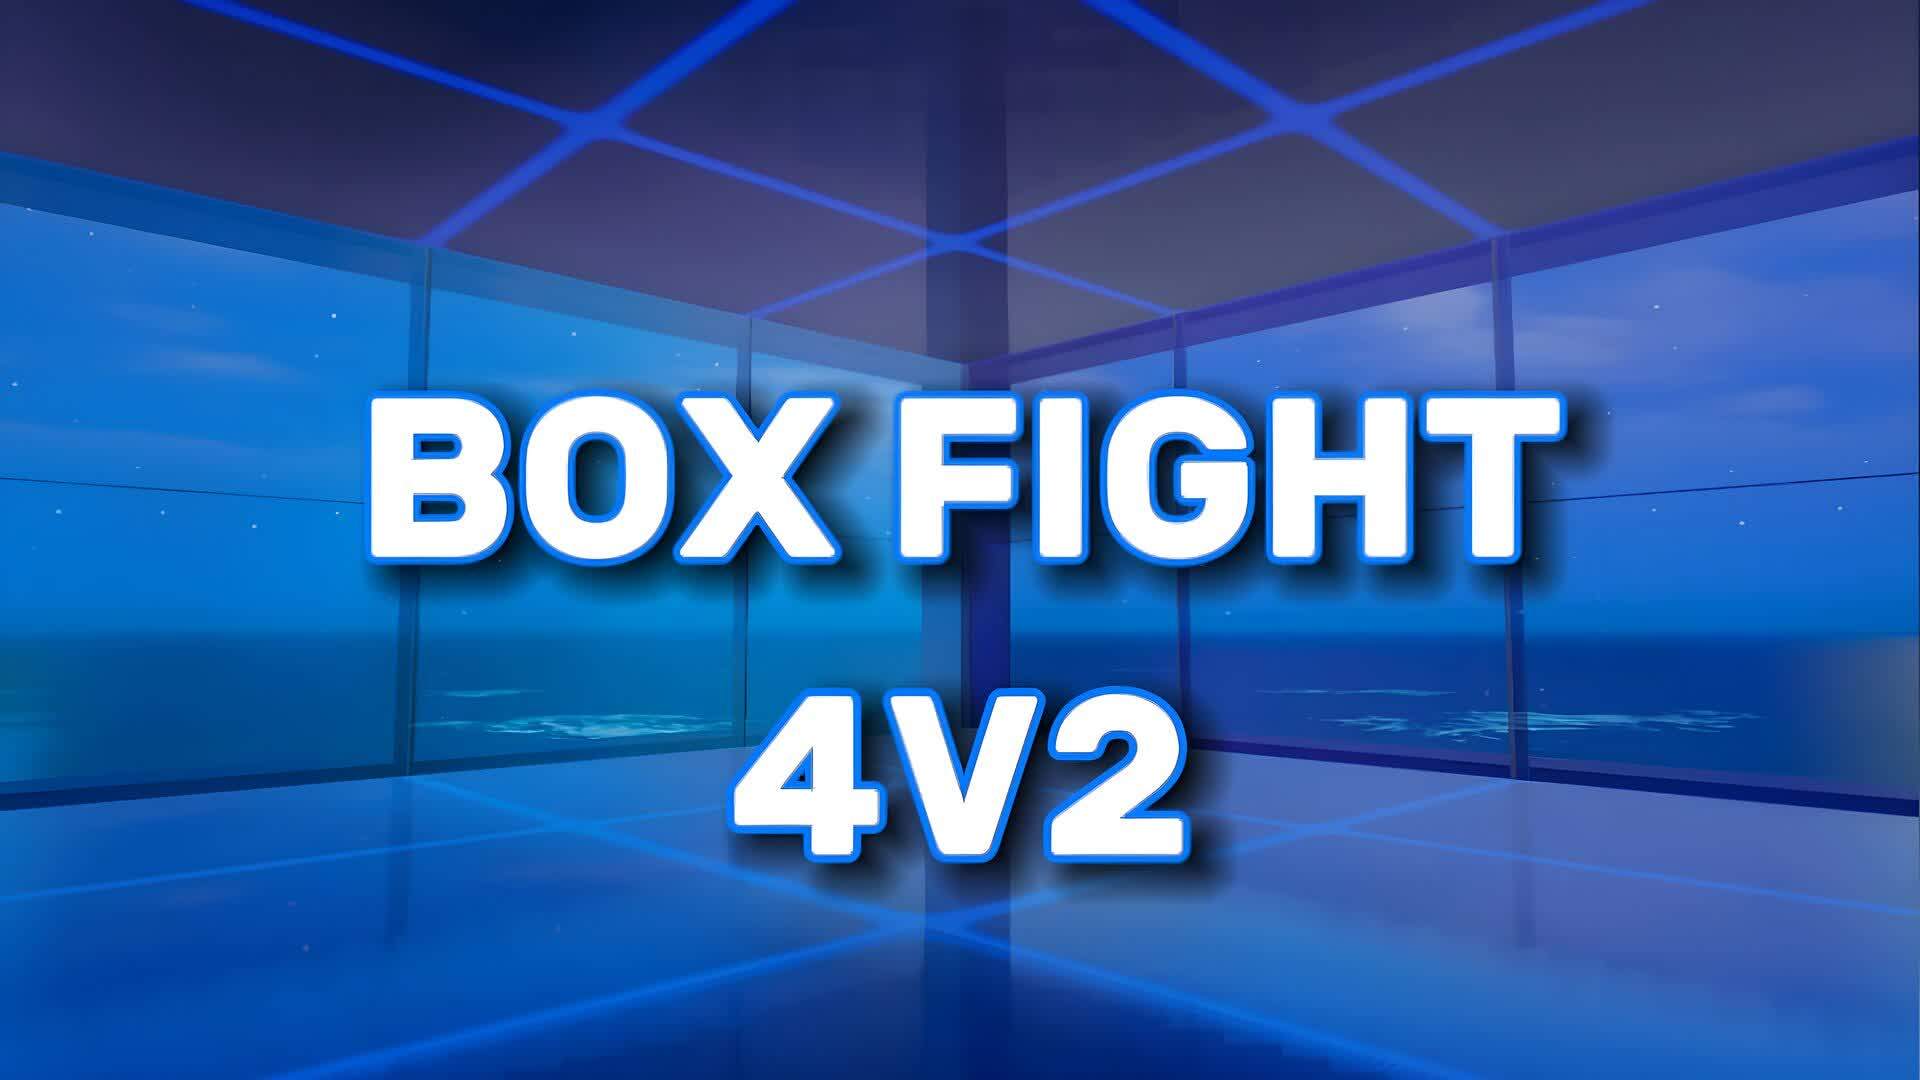 BOX FIGHT 4V2